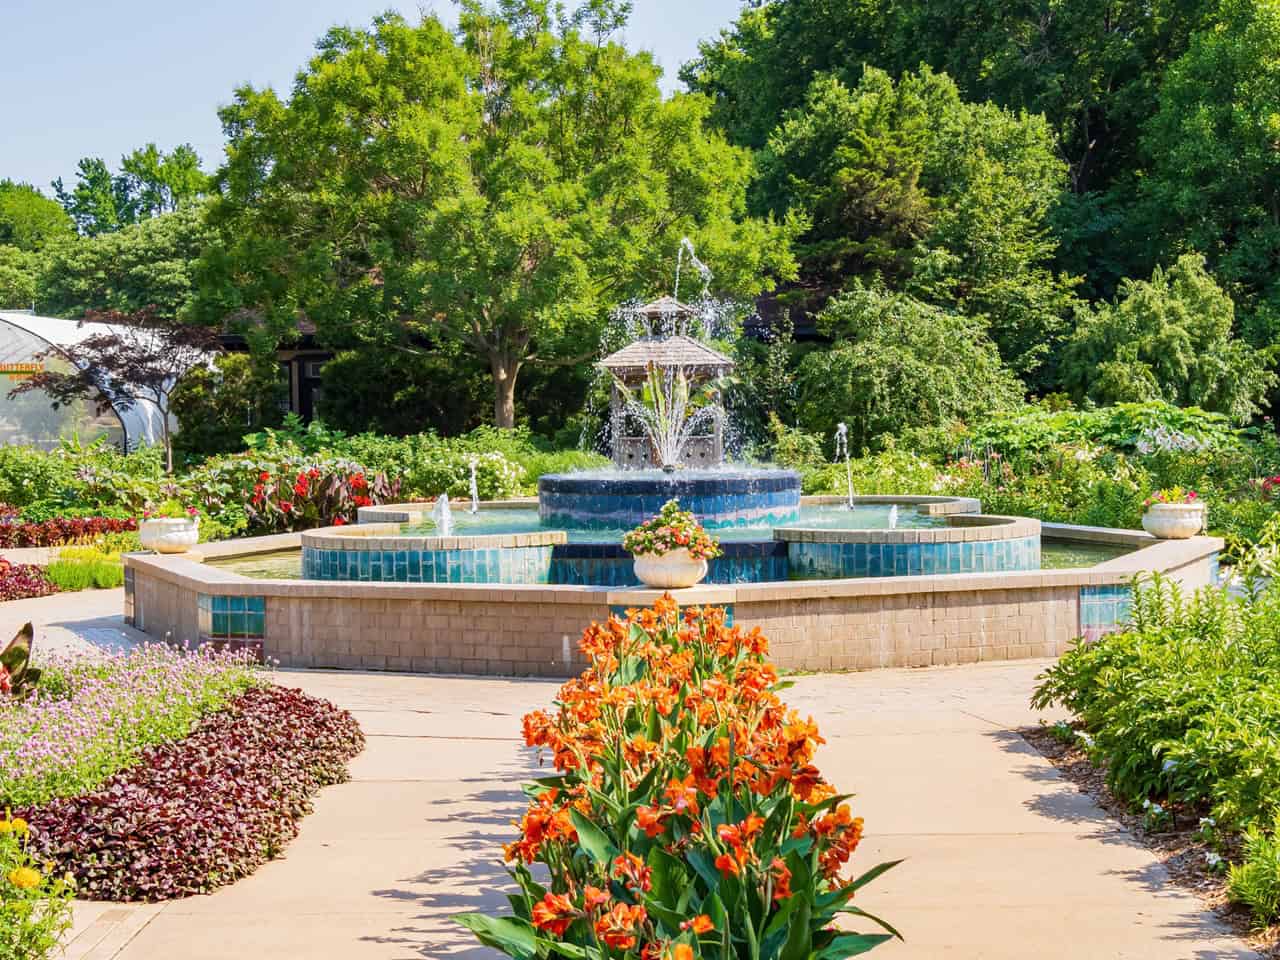 Botanica – The Wichita Gardens